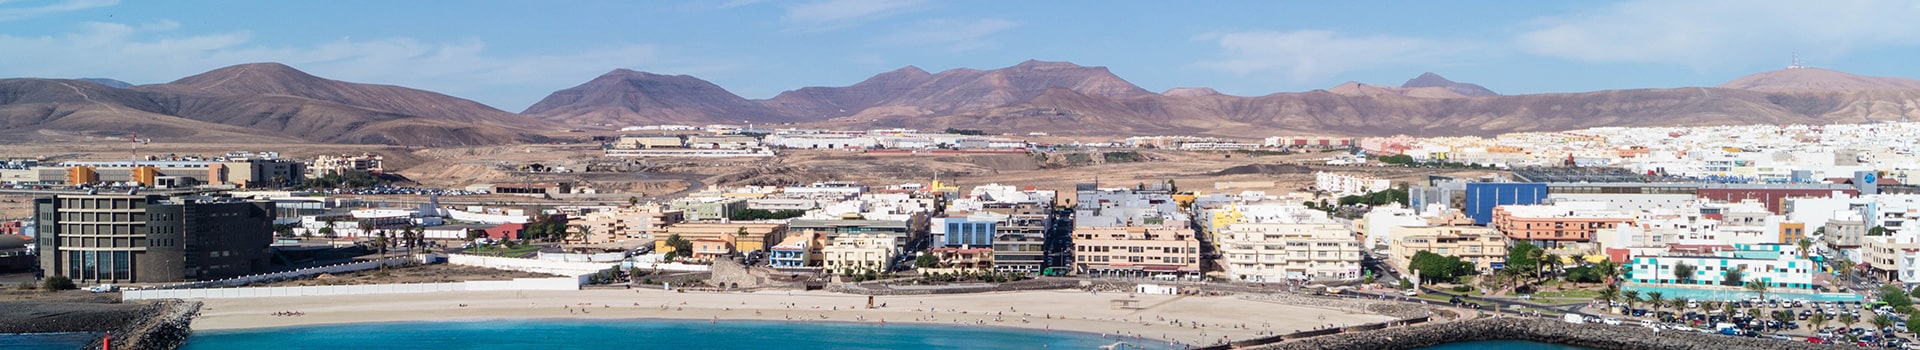 Alicante - Fuerteventura